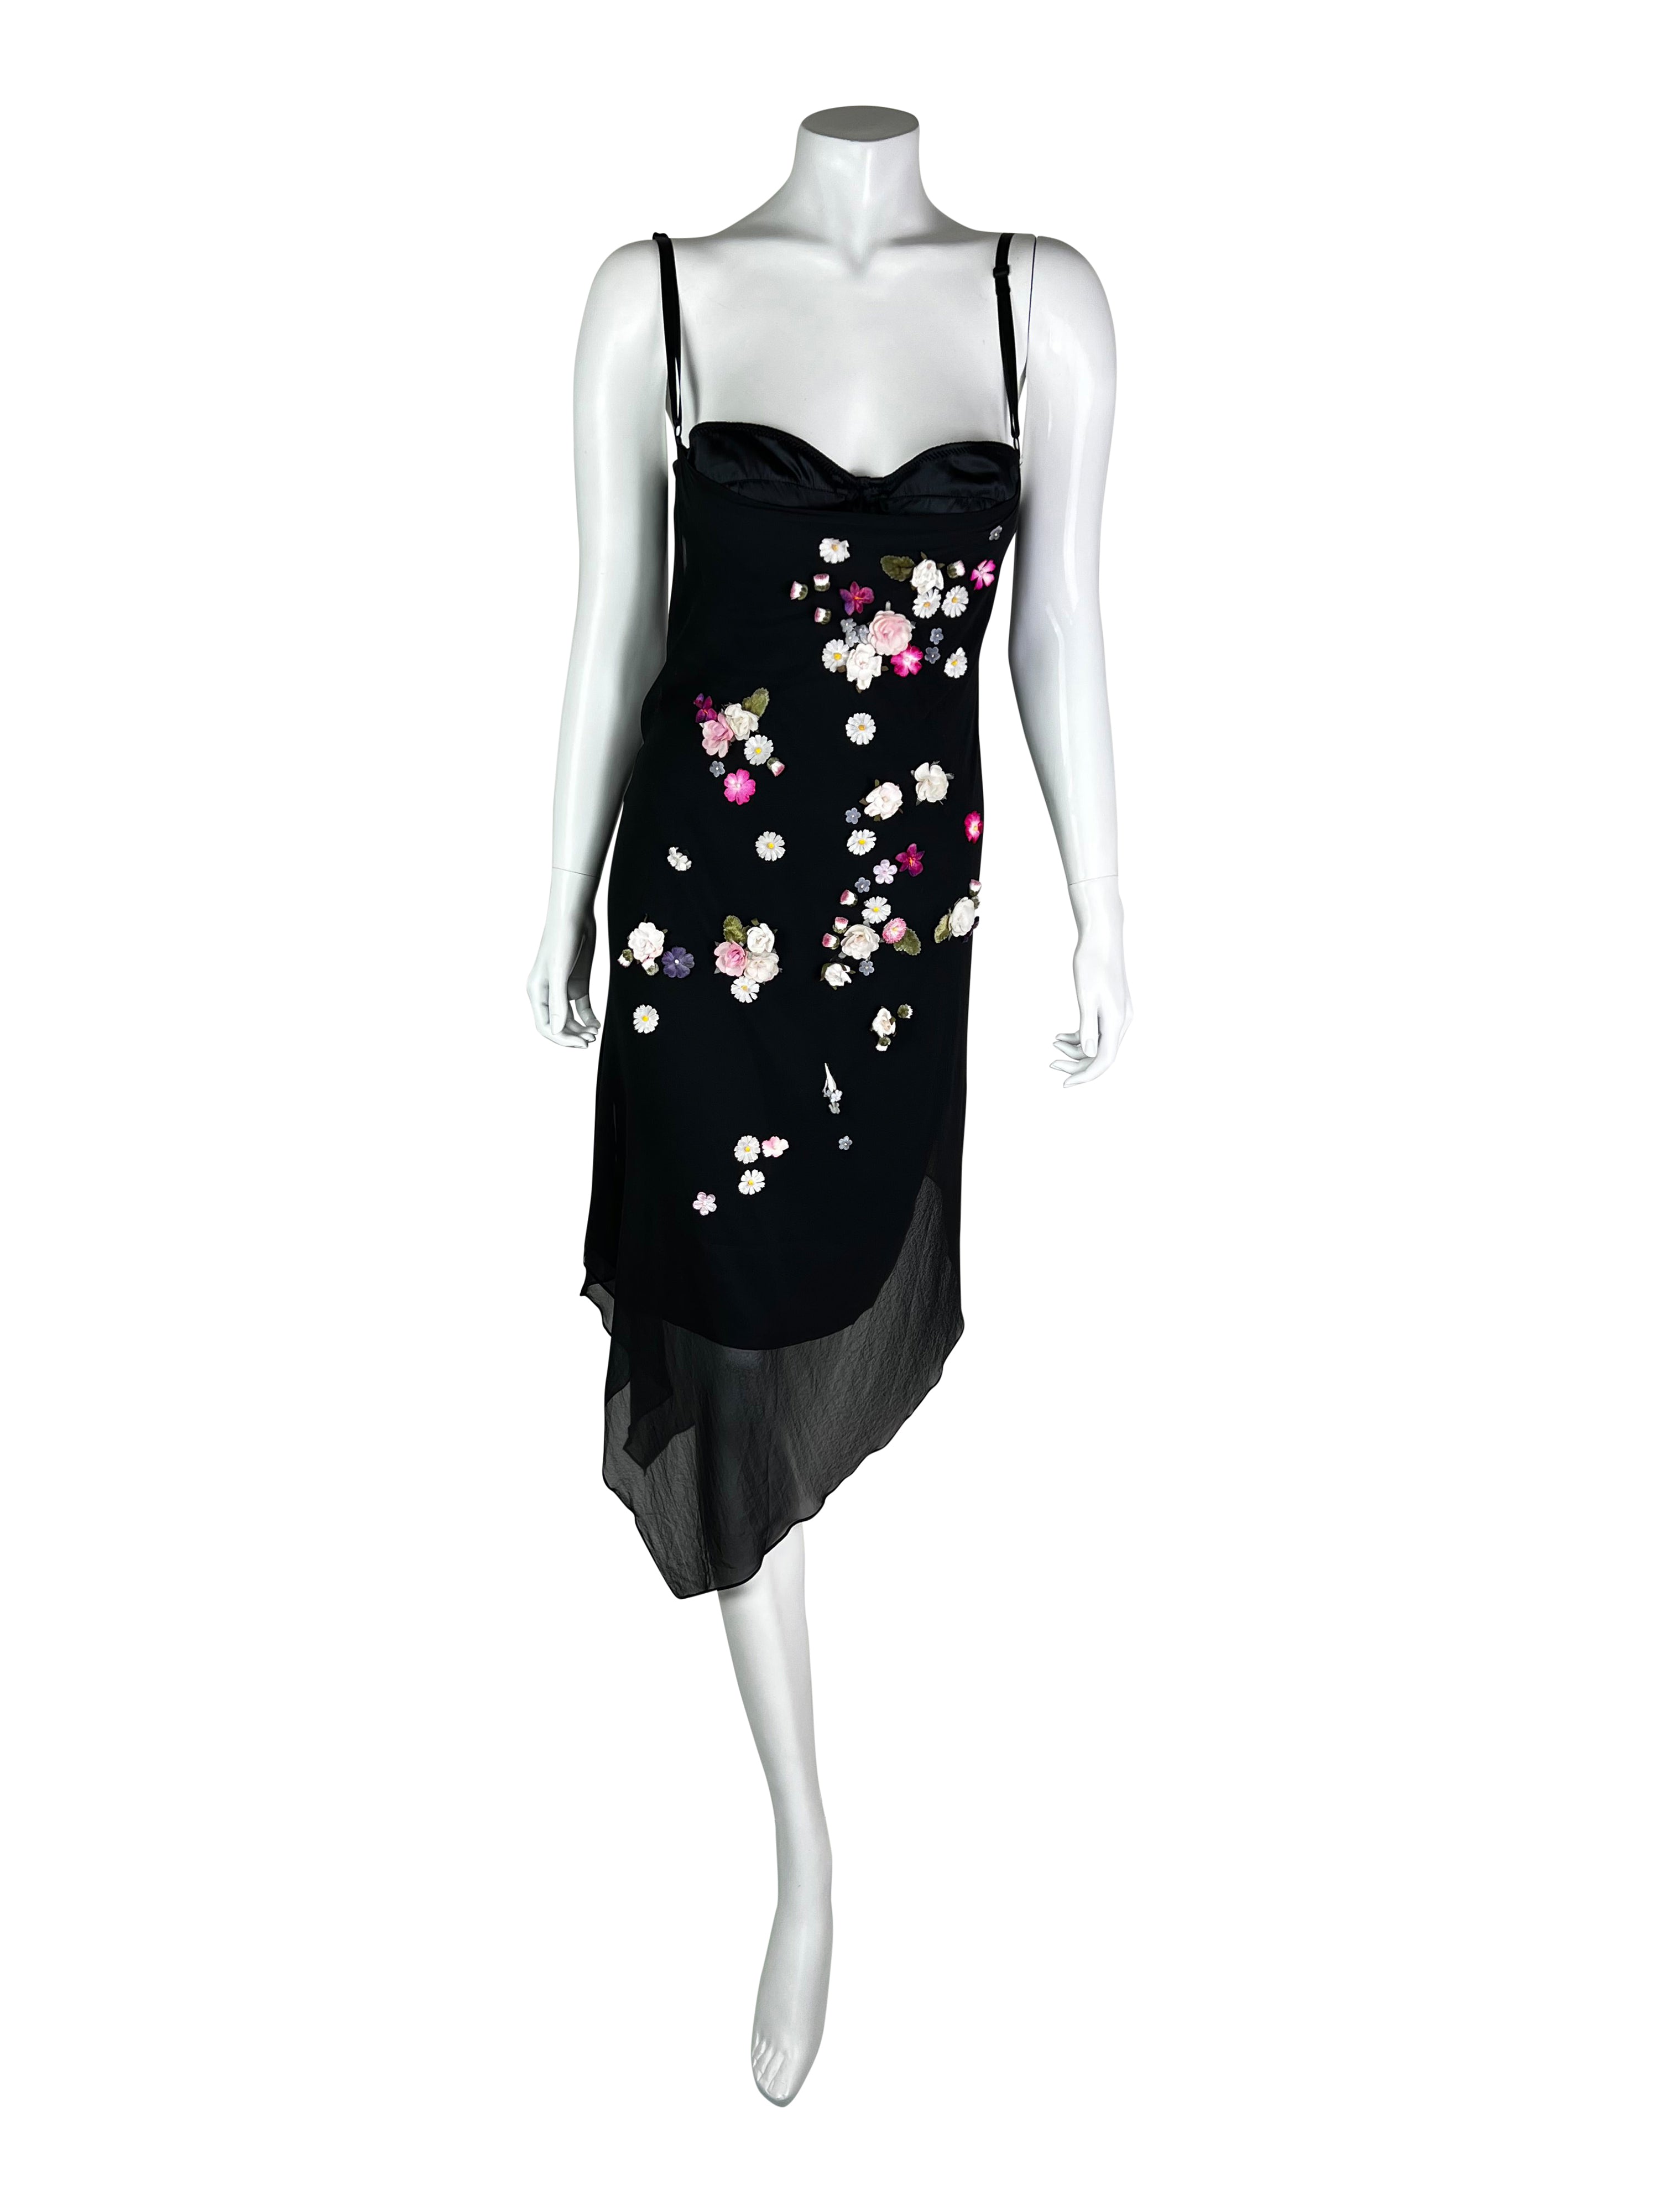 Dolce & Gabbana Fall 1999 Appliqué Silk Dress